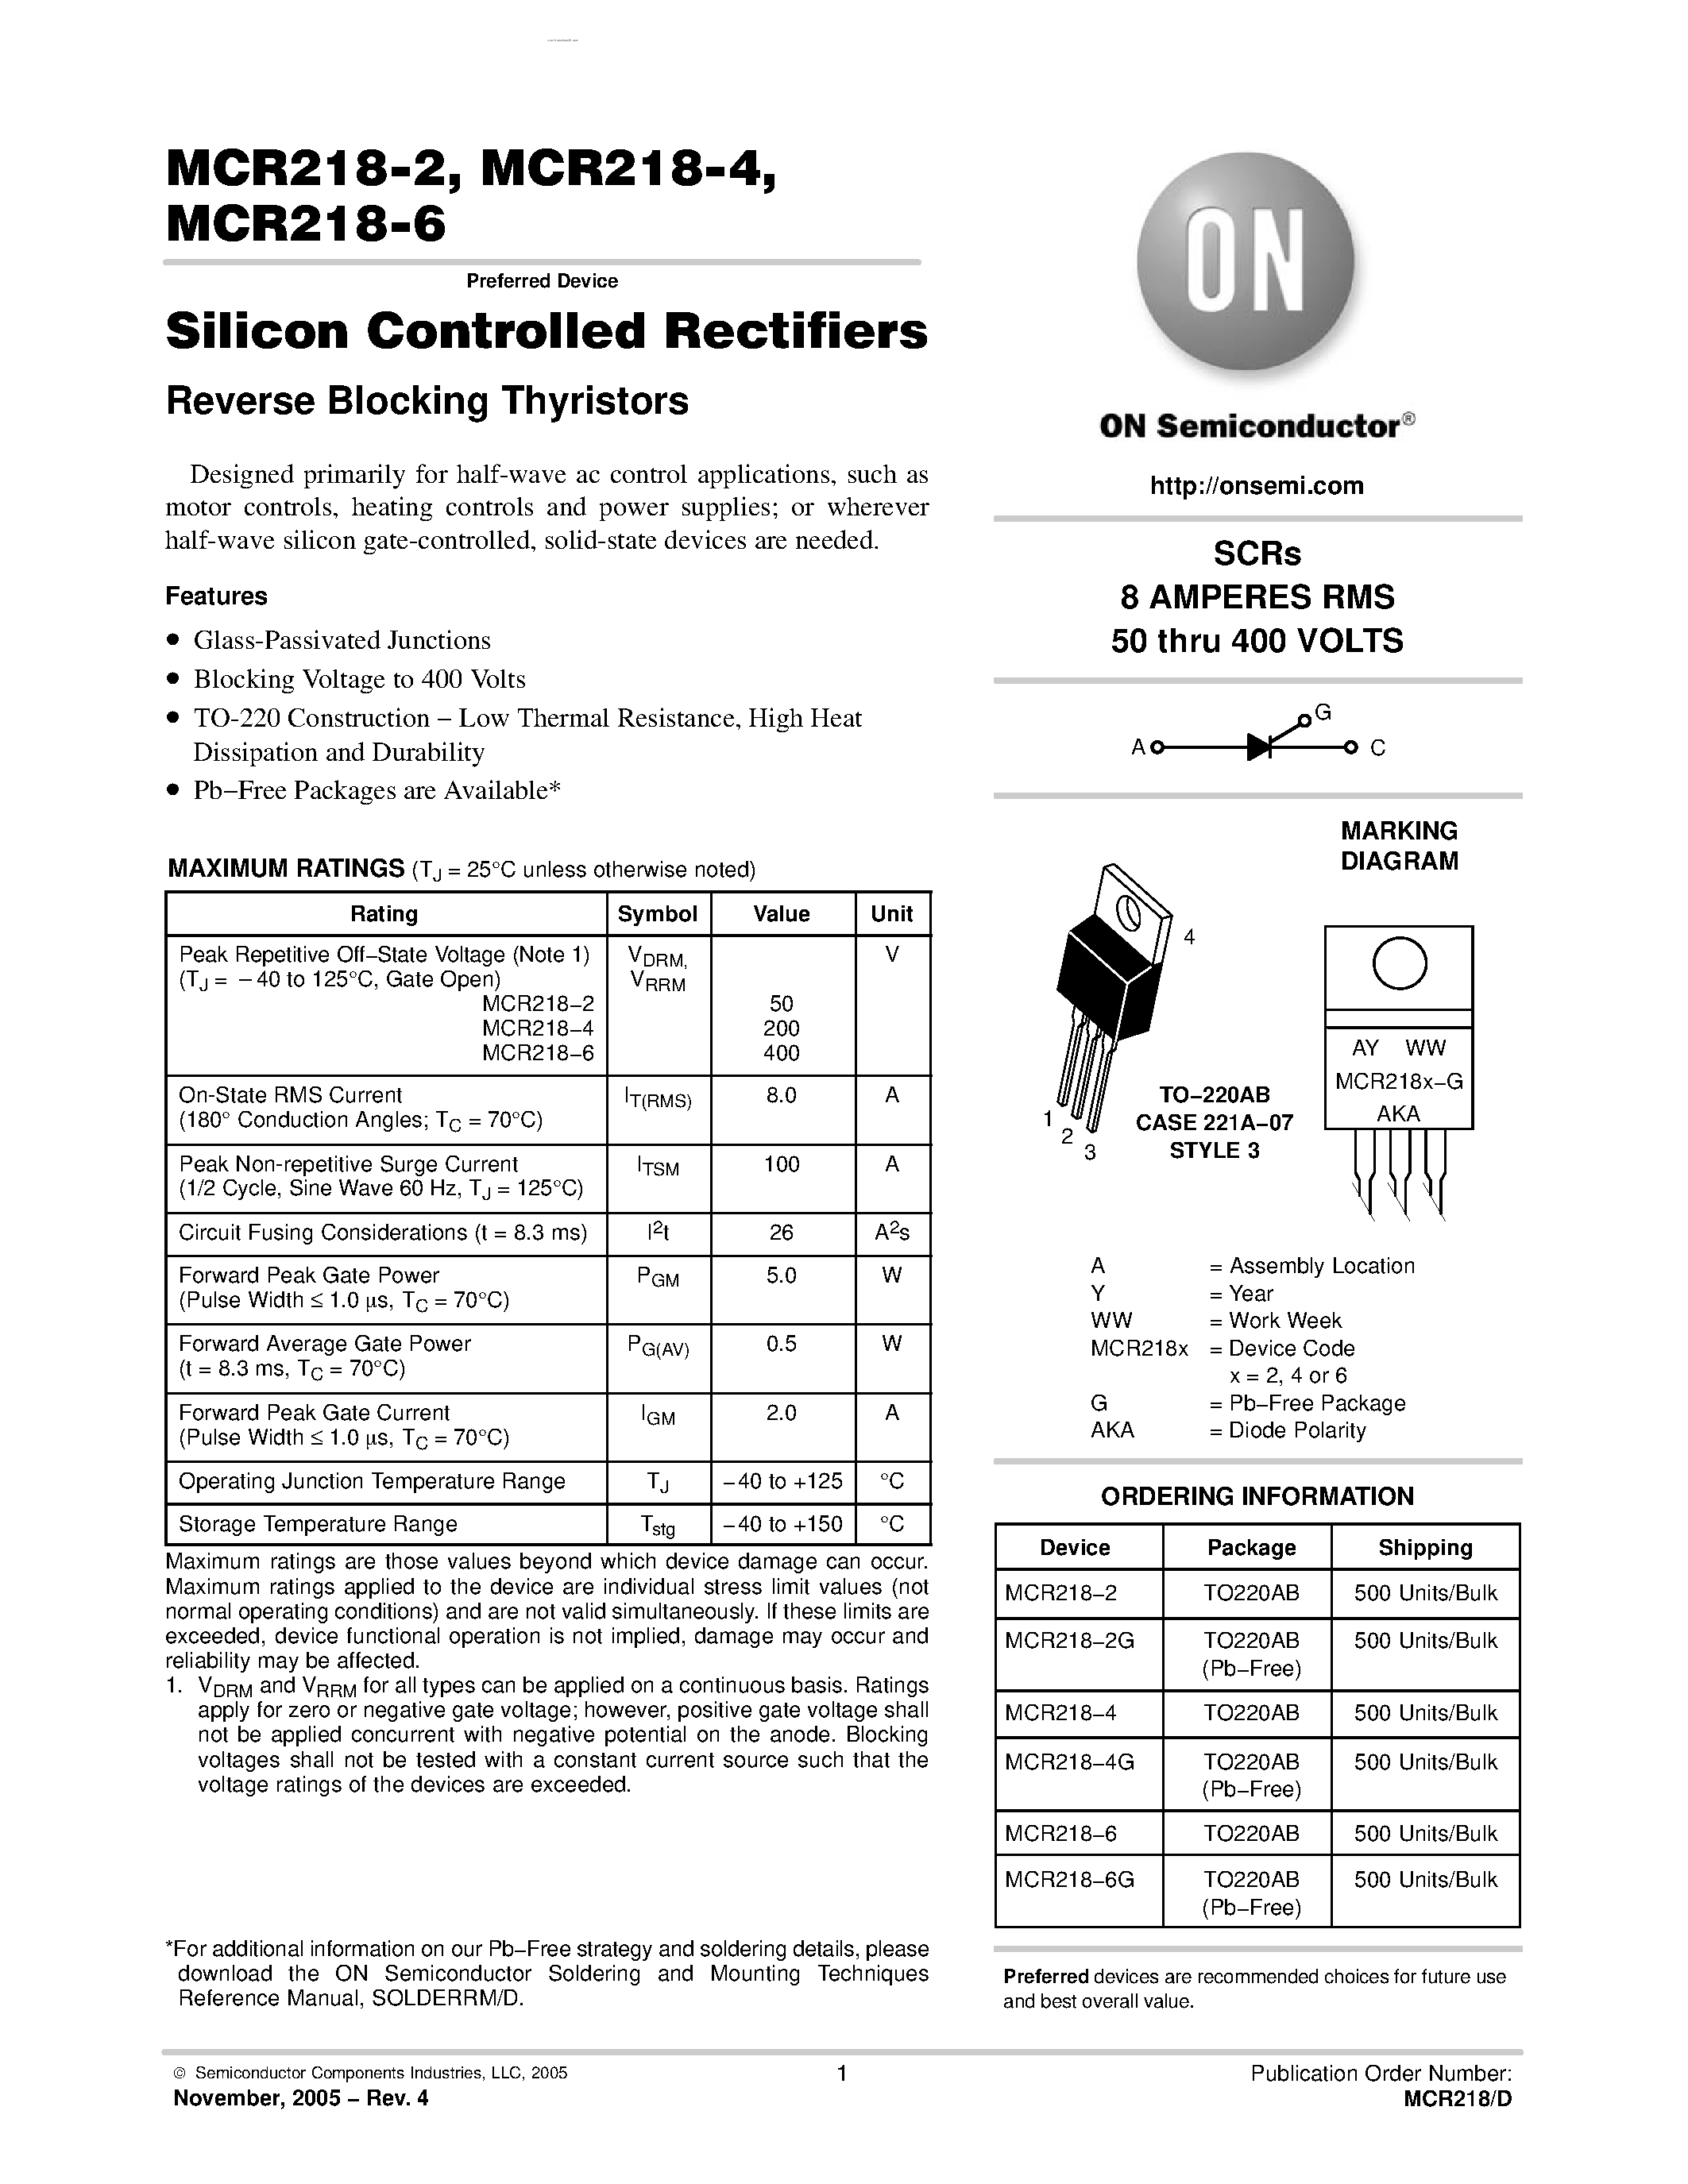 Datasheet MCR218-2 - (MCR218-x) Silicon Controlled Rectifiers Reverse Blocking Thyristors page 1